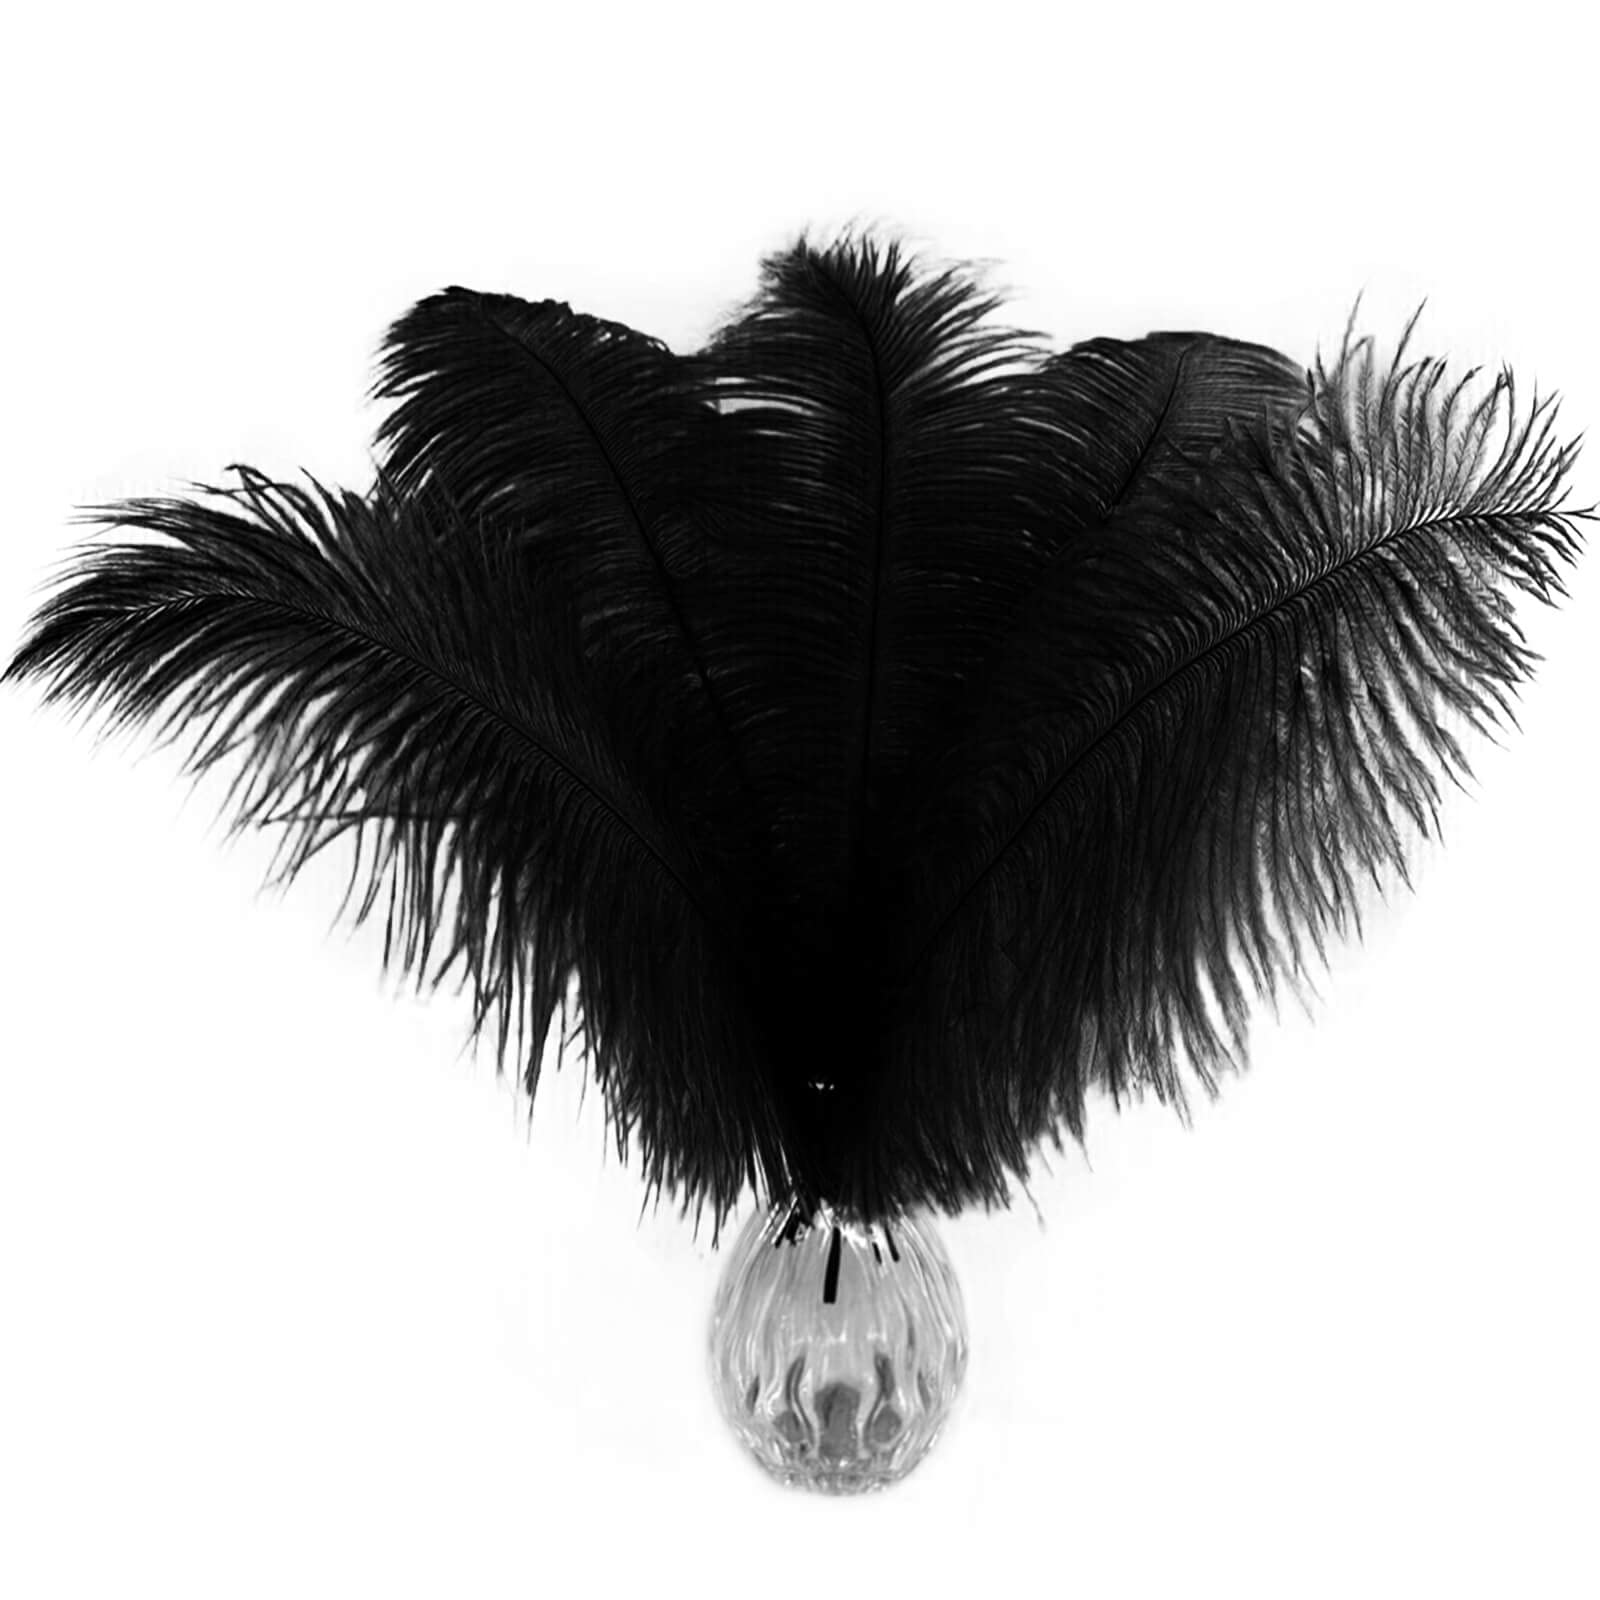  Tigeen 200 Pcs Ostrich Feathers Bulk 12-14 Inch,10-12